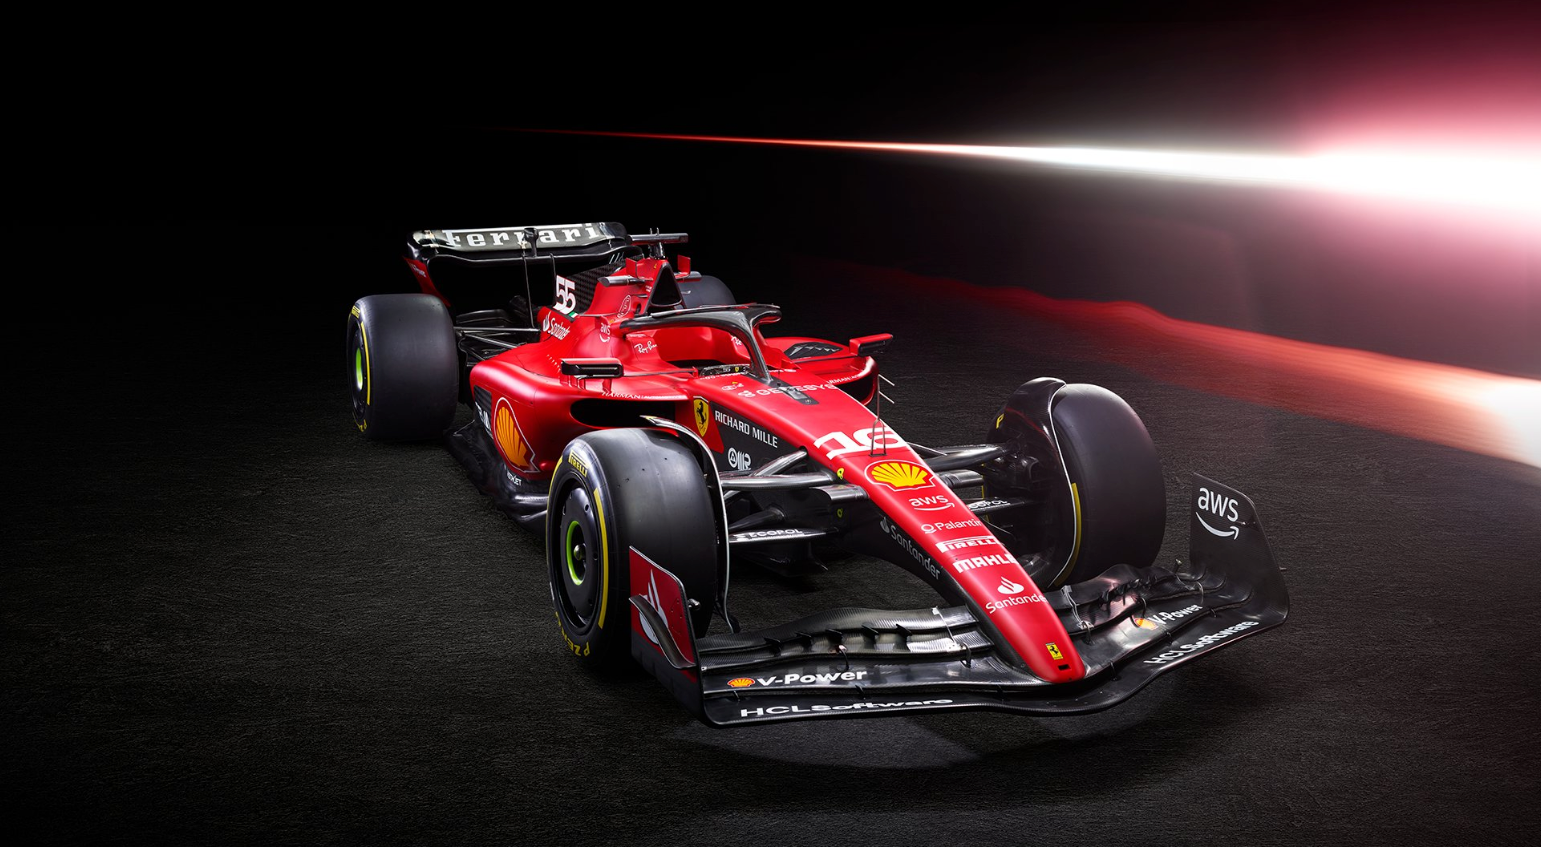 Ferrari unveiled their 2023 Formula 1 car - the SF-23 - at a spectacular launch event in Maranello